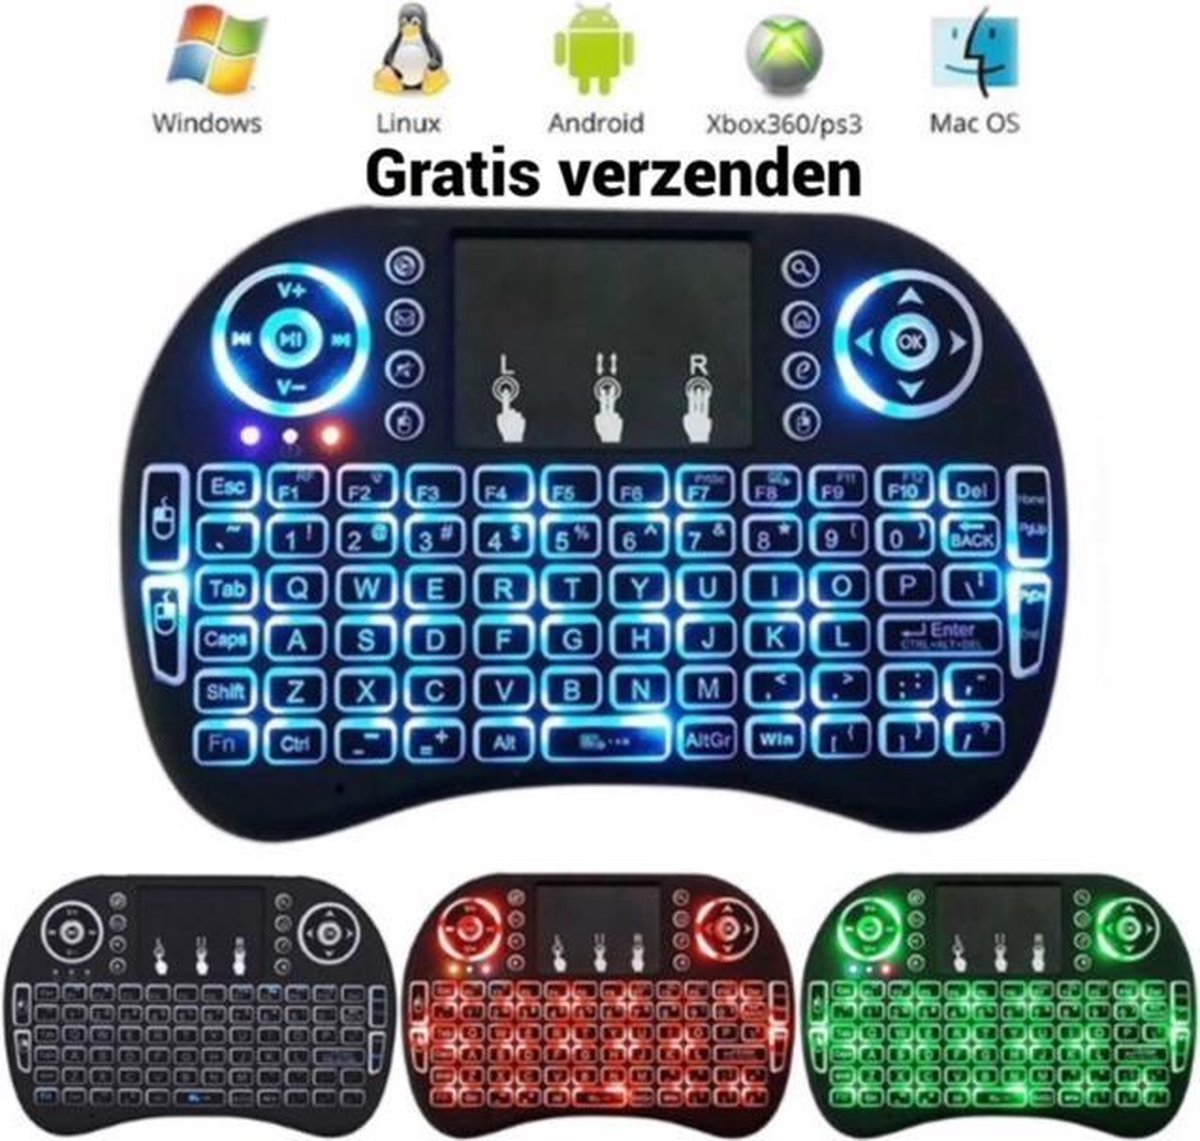 Saizi Mini i8 + toetsenbord met backlight Led keyboard voor ANDROID,Windows,Linux,Raspberry Pi,Smart TV, Console,KODI, met 3 licht kleuren ,rood,groen,blauw .